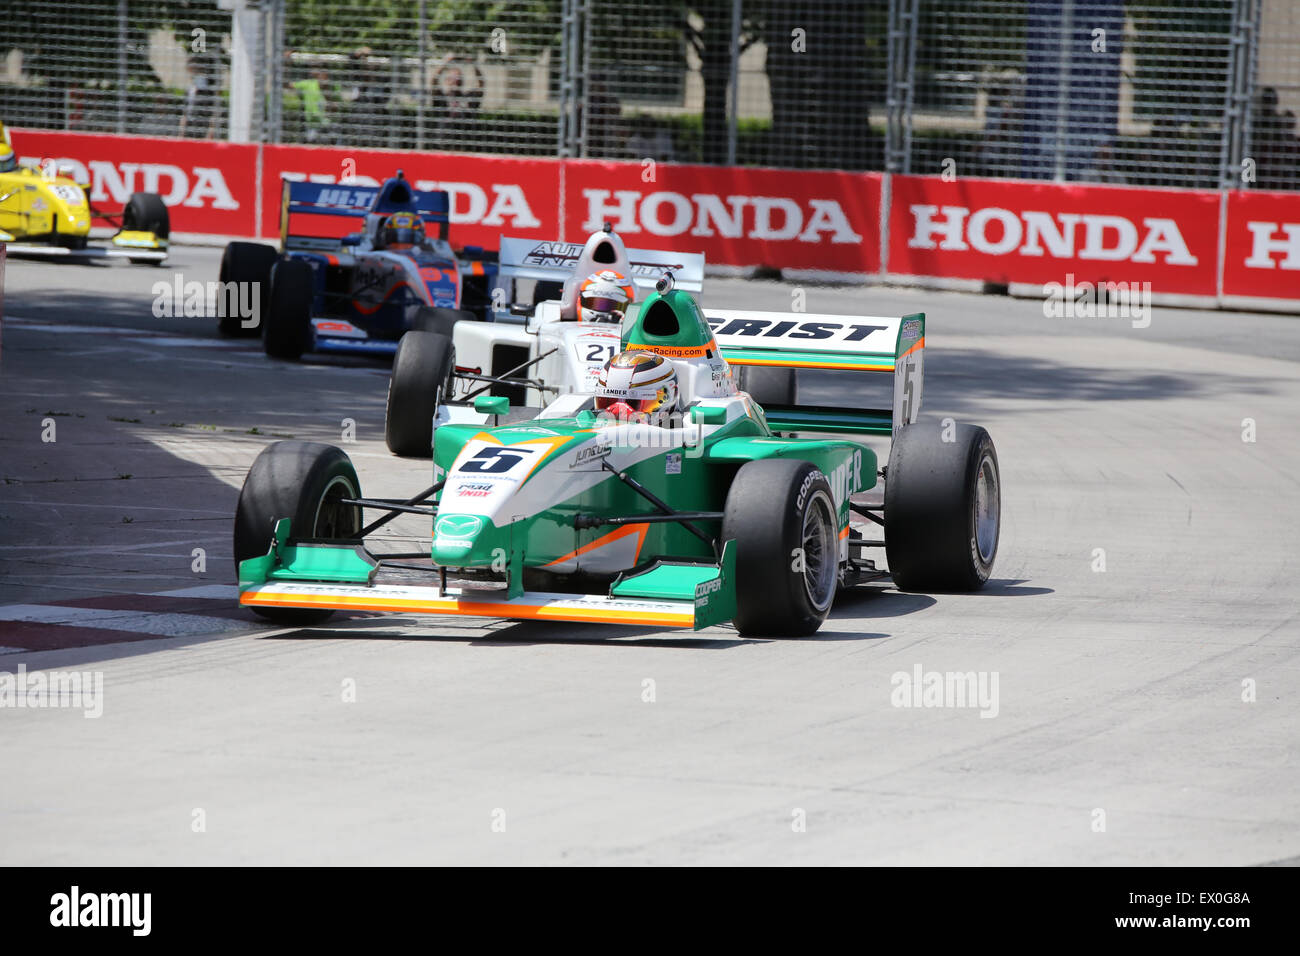 Honda Indy Toronto street car racing event Foto Stock